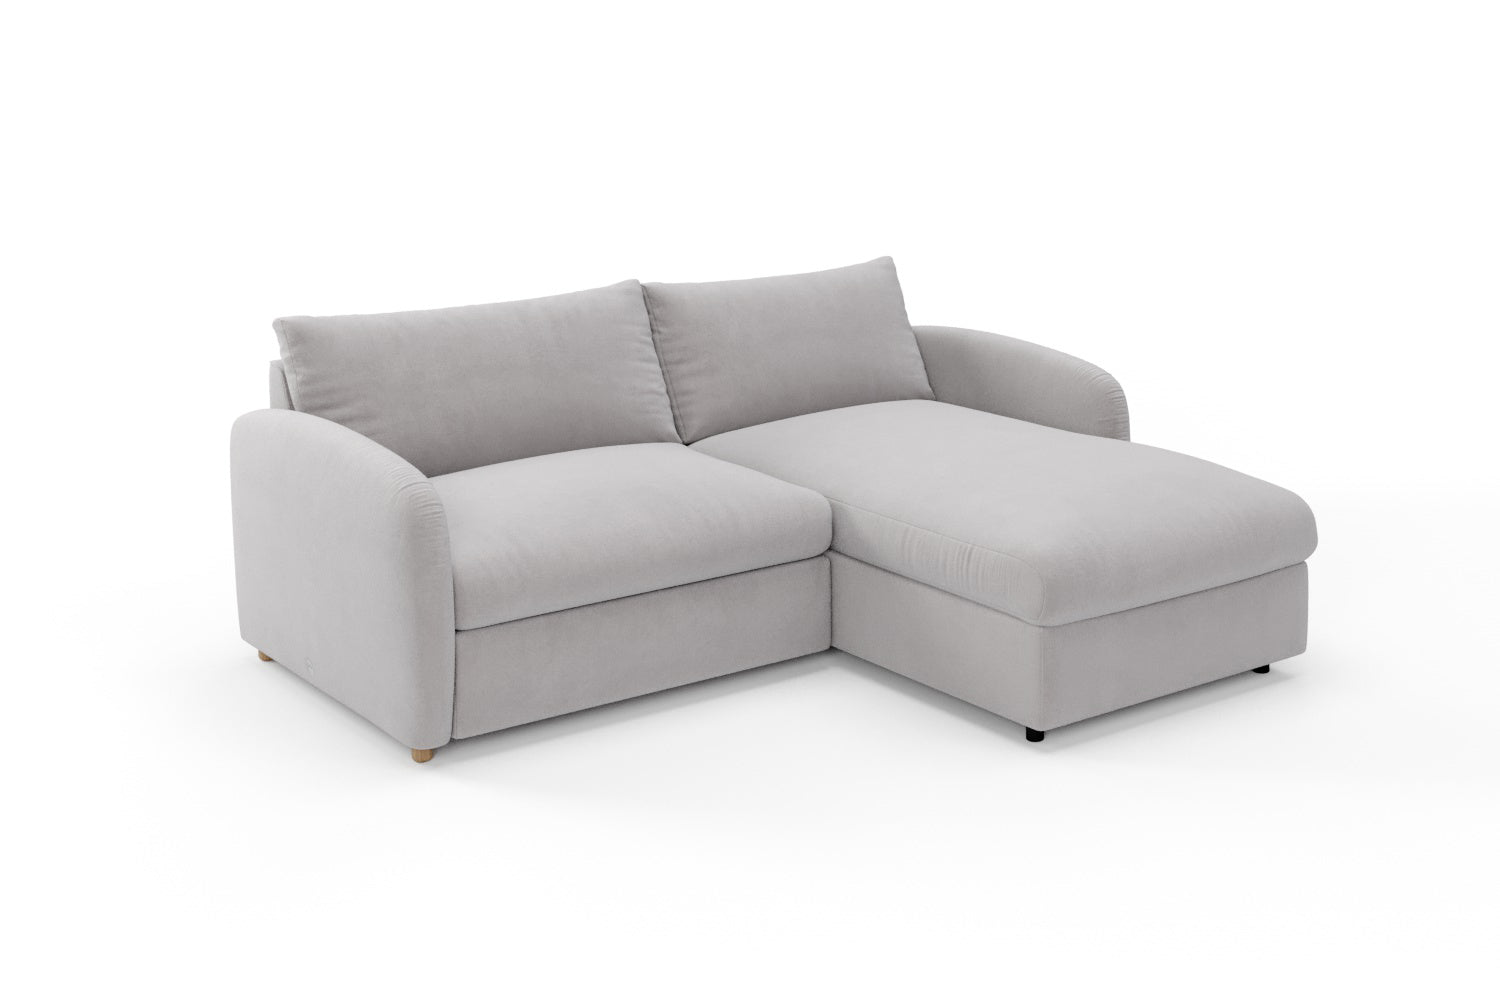 The Small Biggie - Chaise Single Sofa Bed - Warm Grey